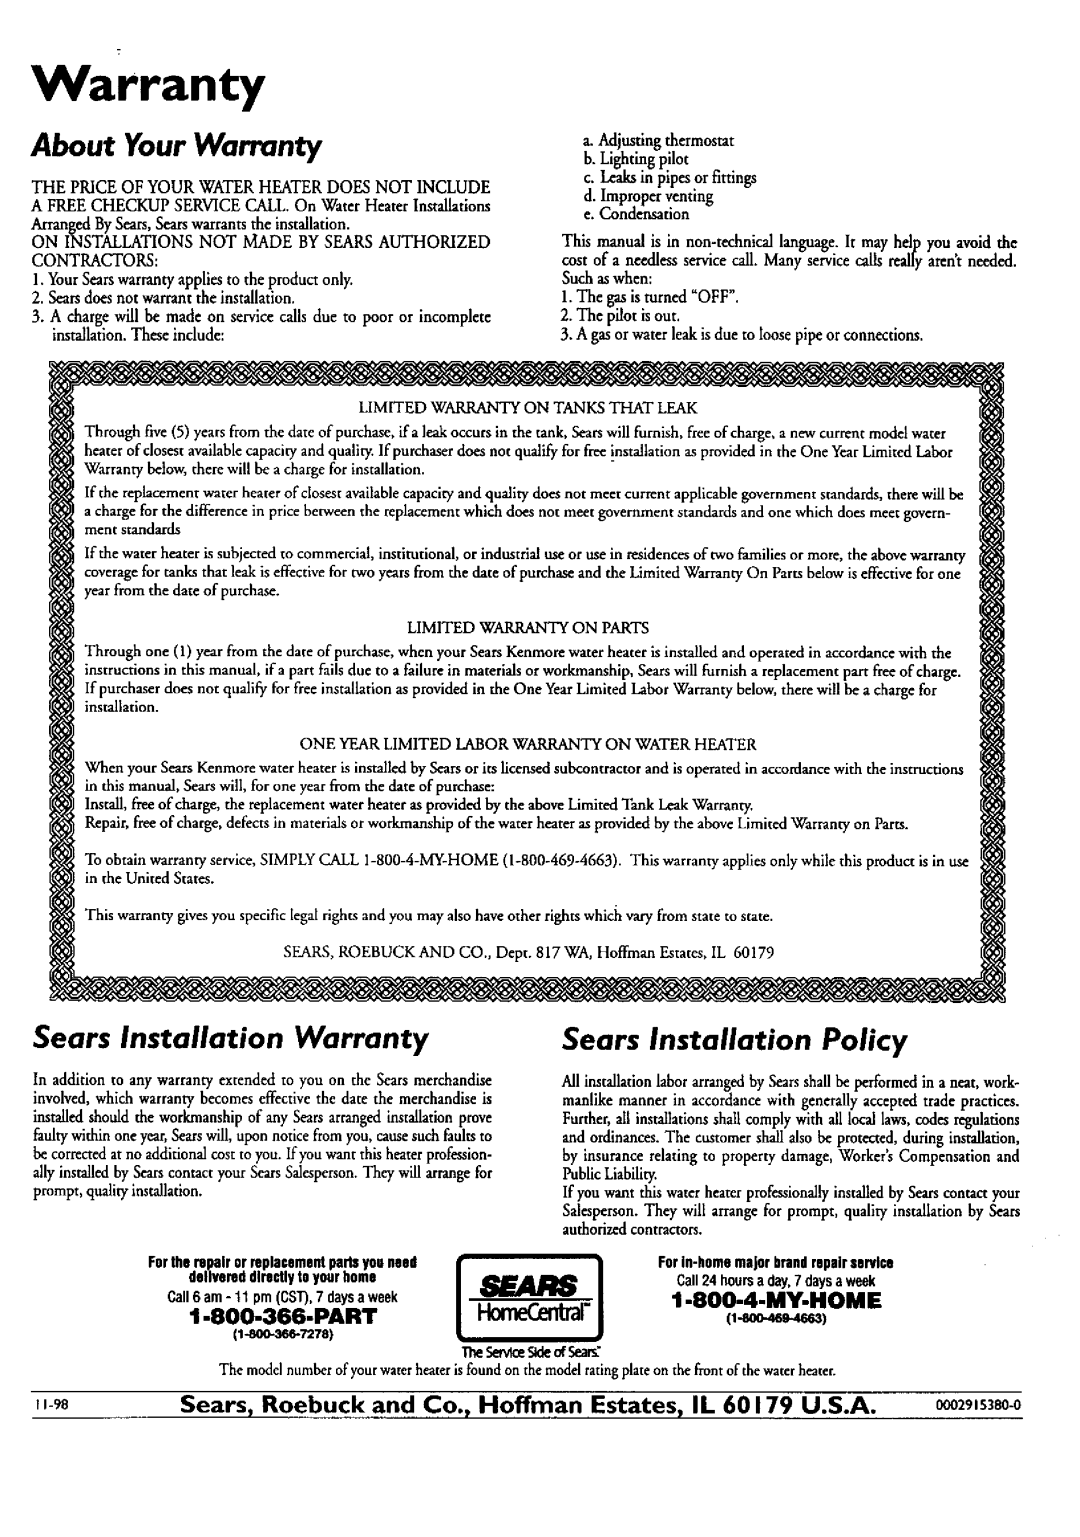 Kenmore 153.33459 warranty, r,98, 029,s3, About Your Warranty, Sears Installation Warranty, Sears Installation Policy 